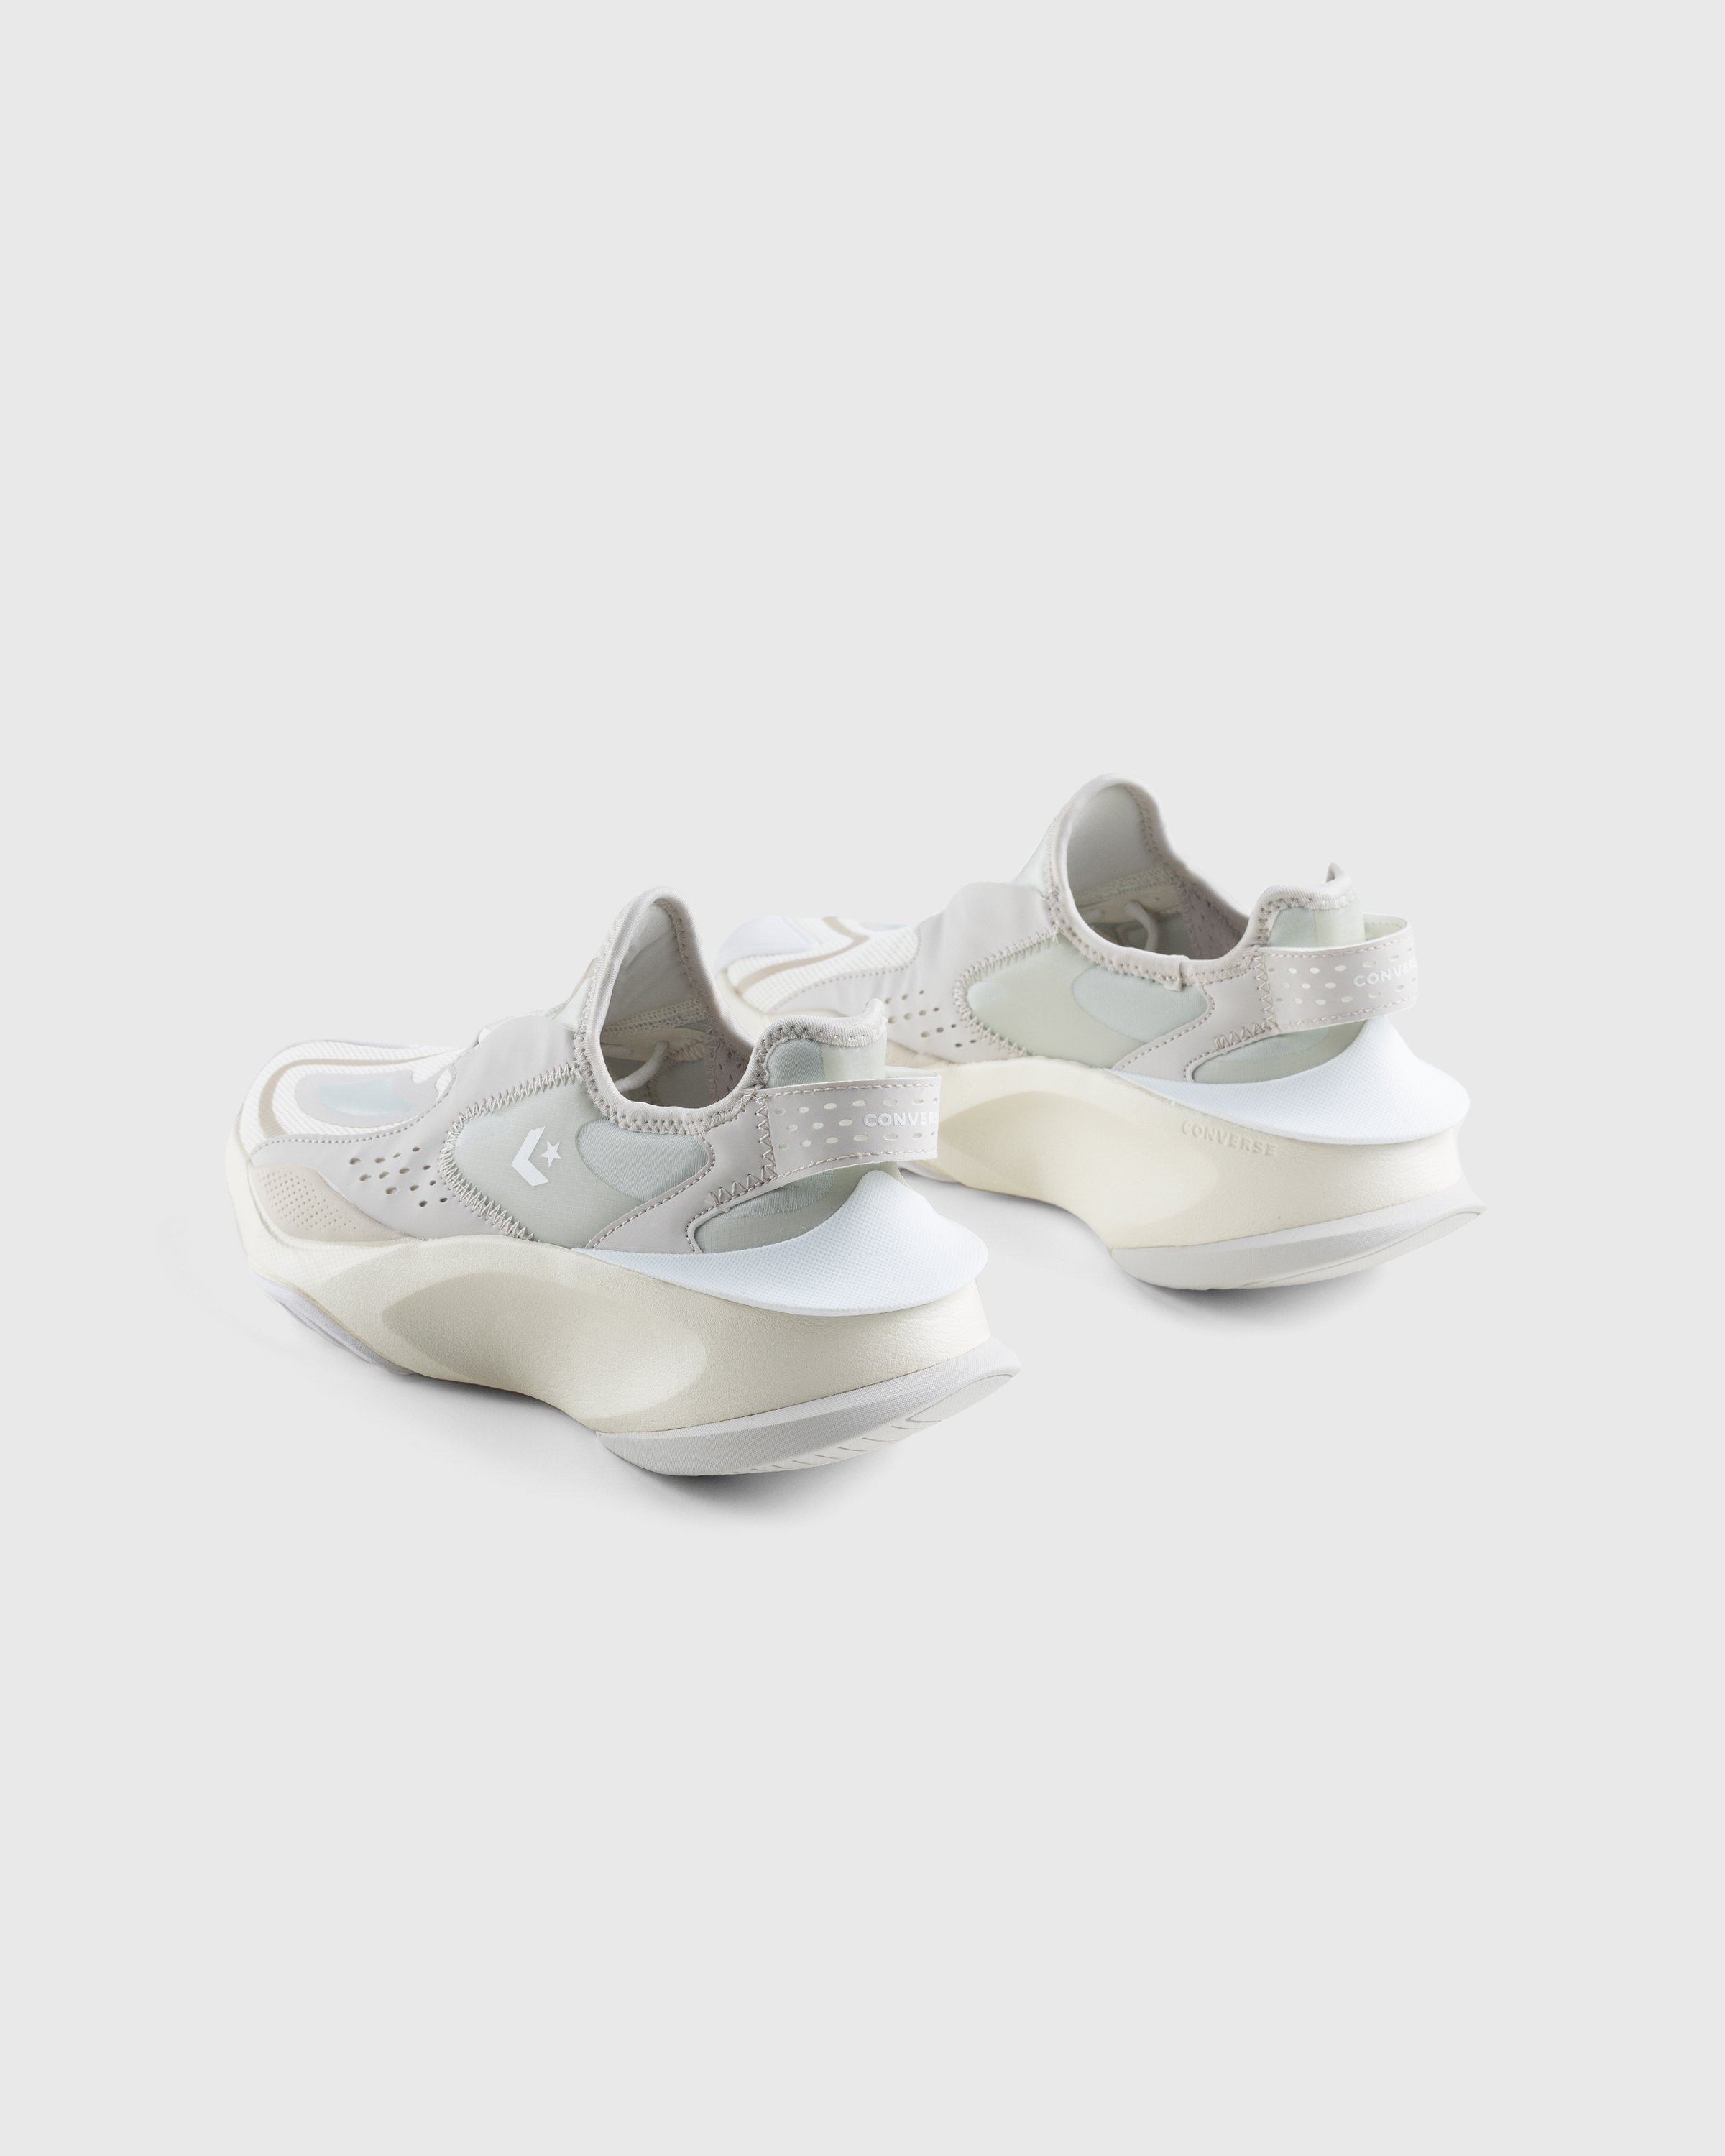 Converse - Aeon Active Cx Ox Egret/Pale Putty - Footwear - White - Image 4